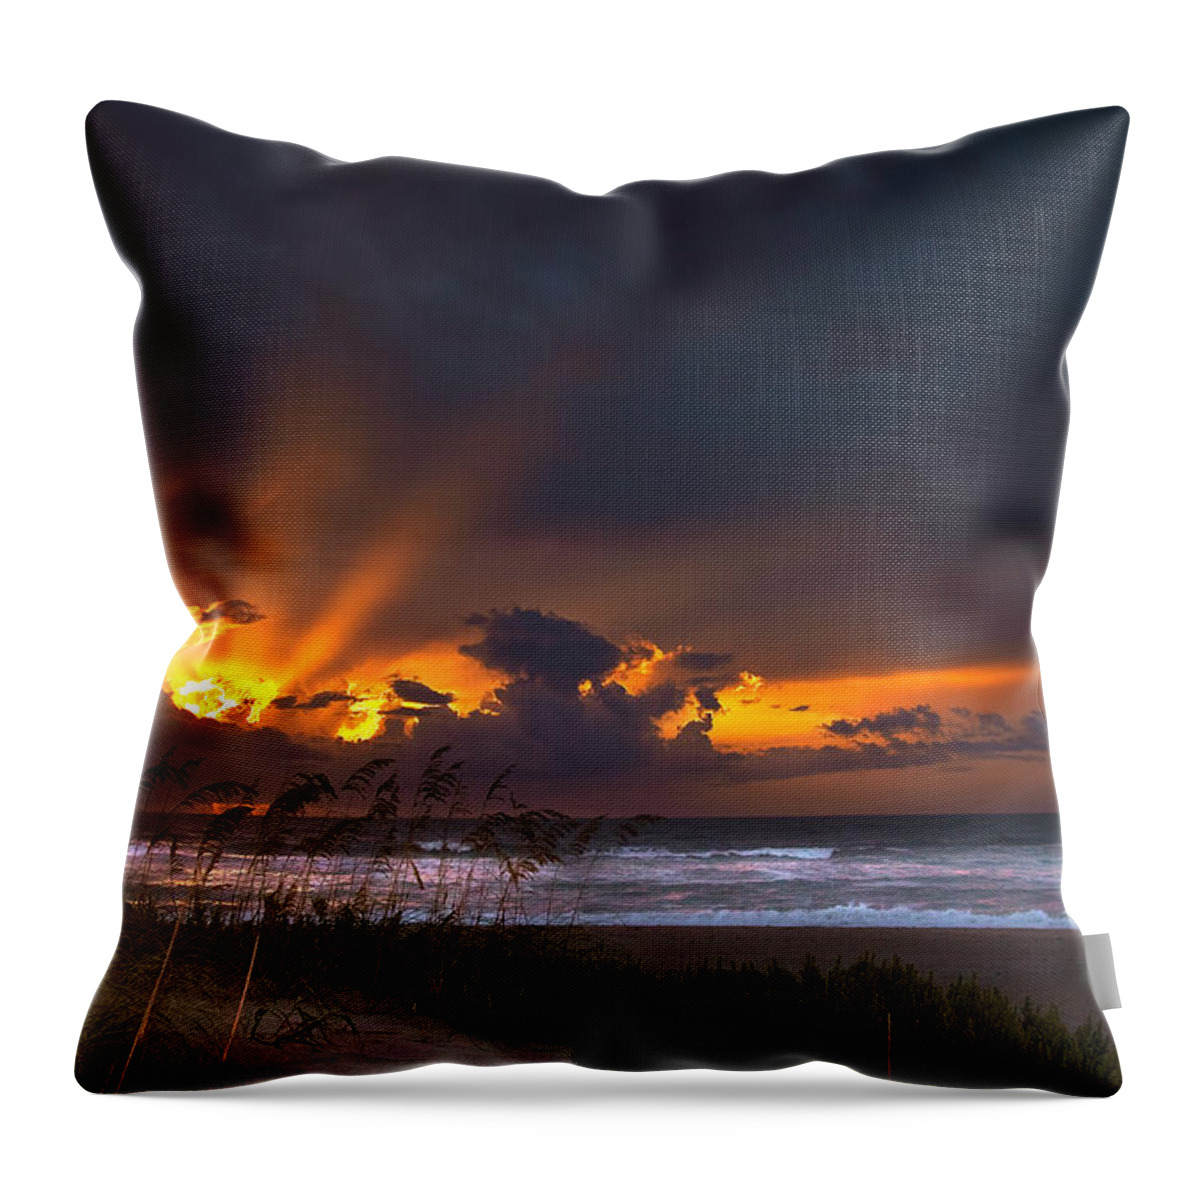 Sunrise Throw Pillow featuring the photograph Beach Sunrise by Ken Barrett